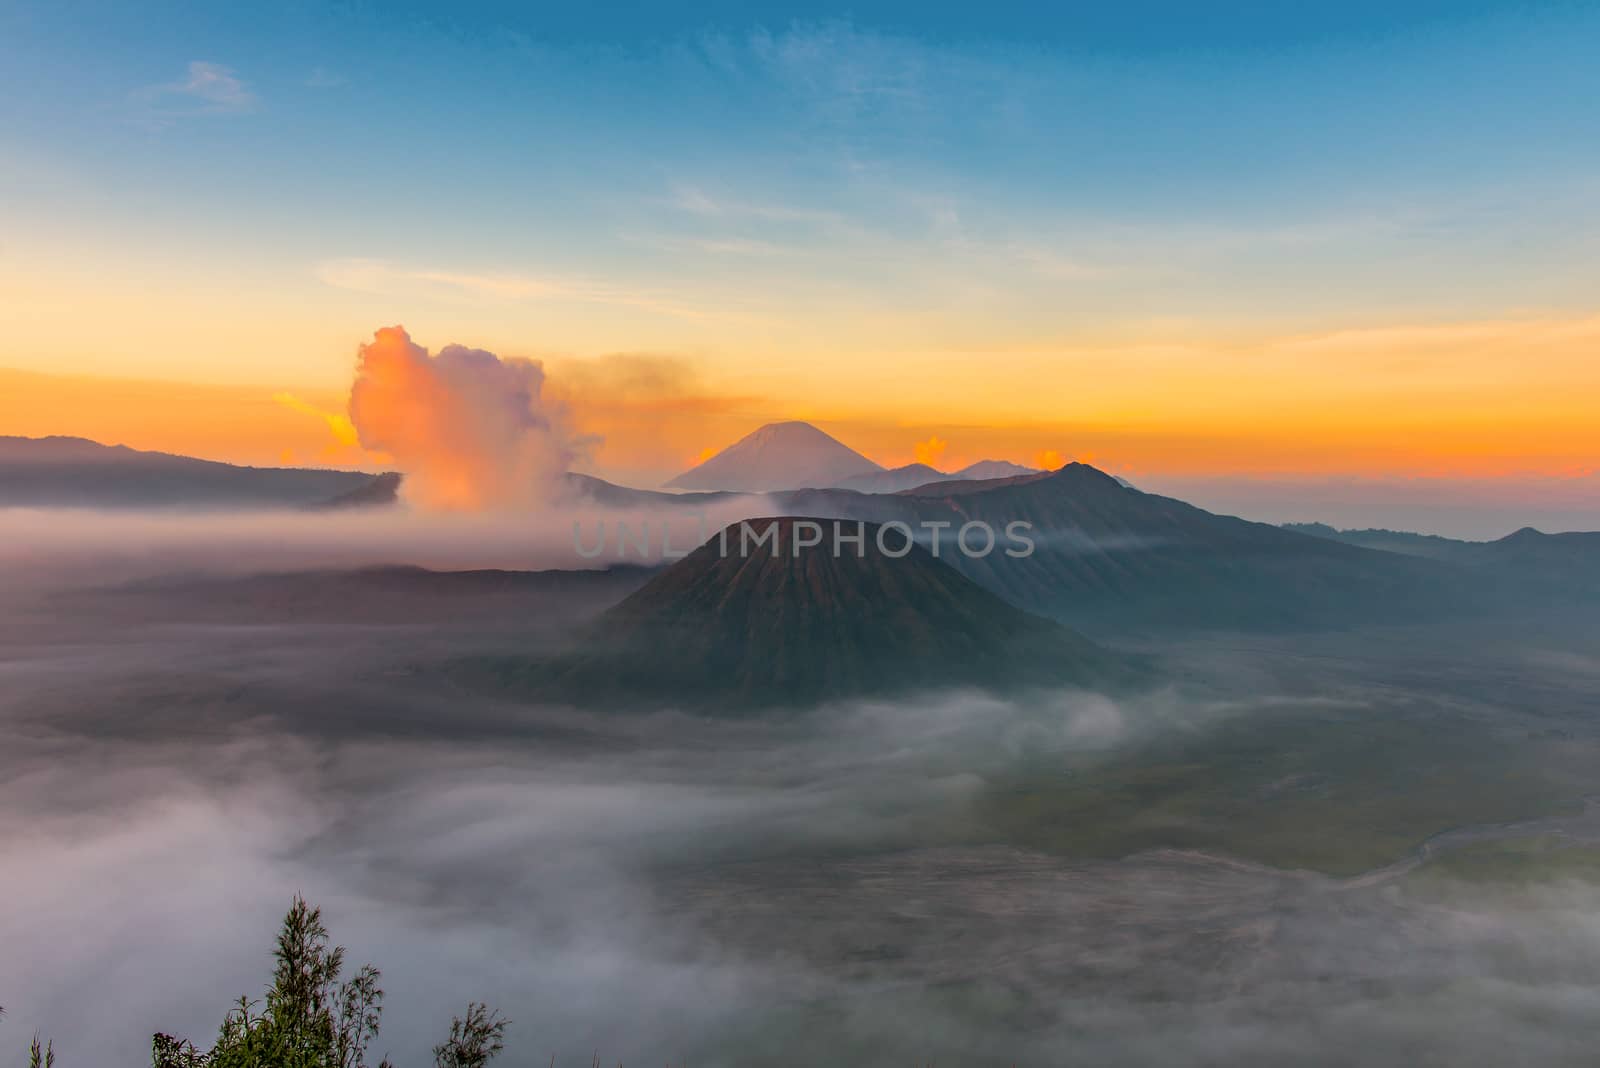 Mount Bromo volcano (Gunung Bromo) in Bromo Tengger Semeru National Park, East Java, Indonesia.